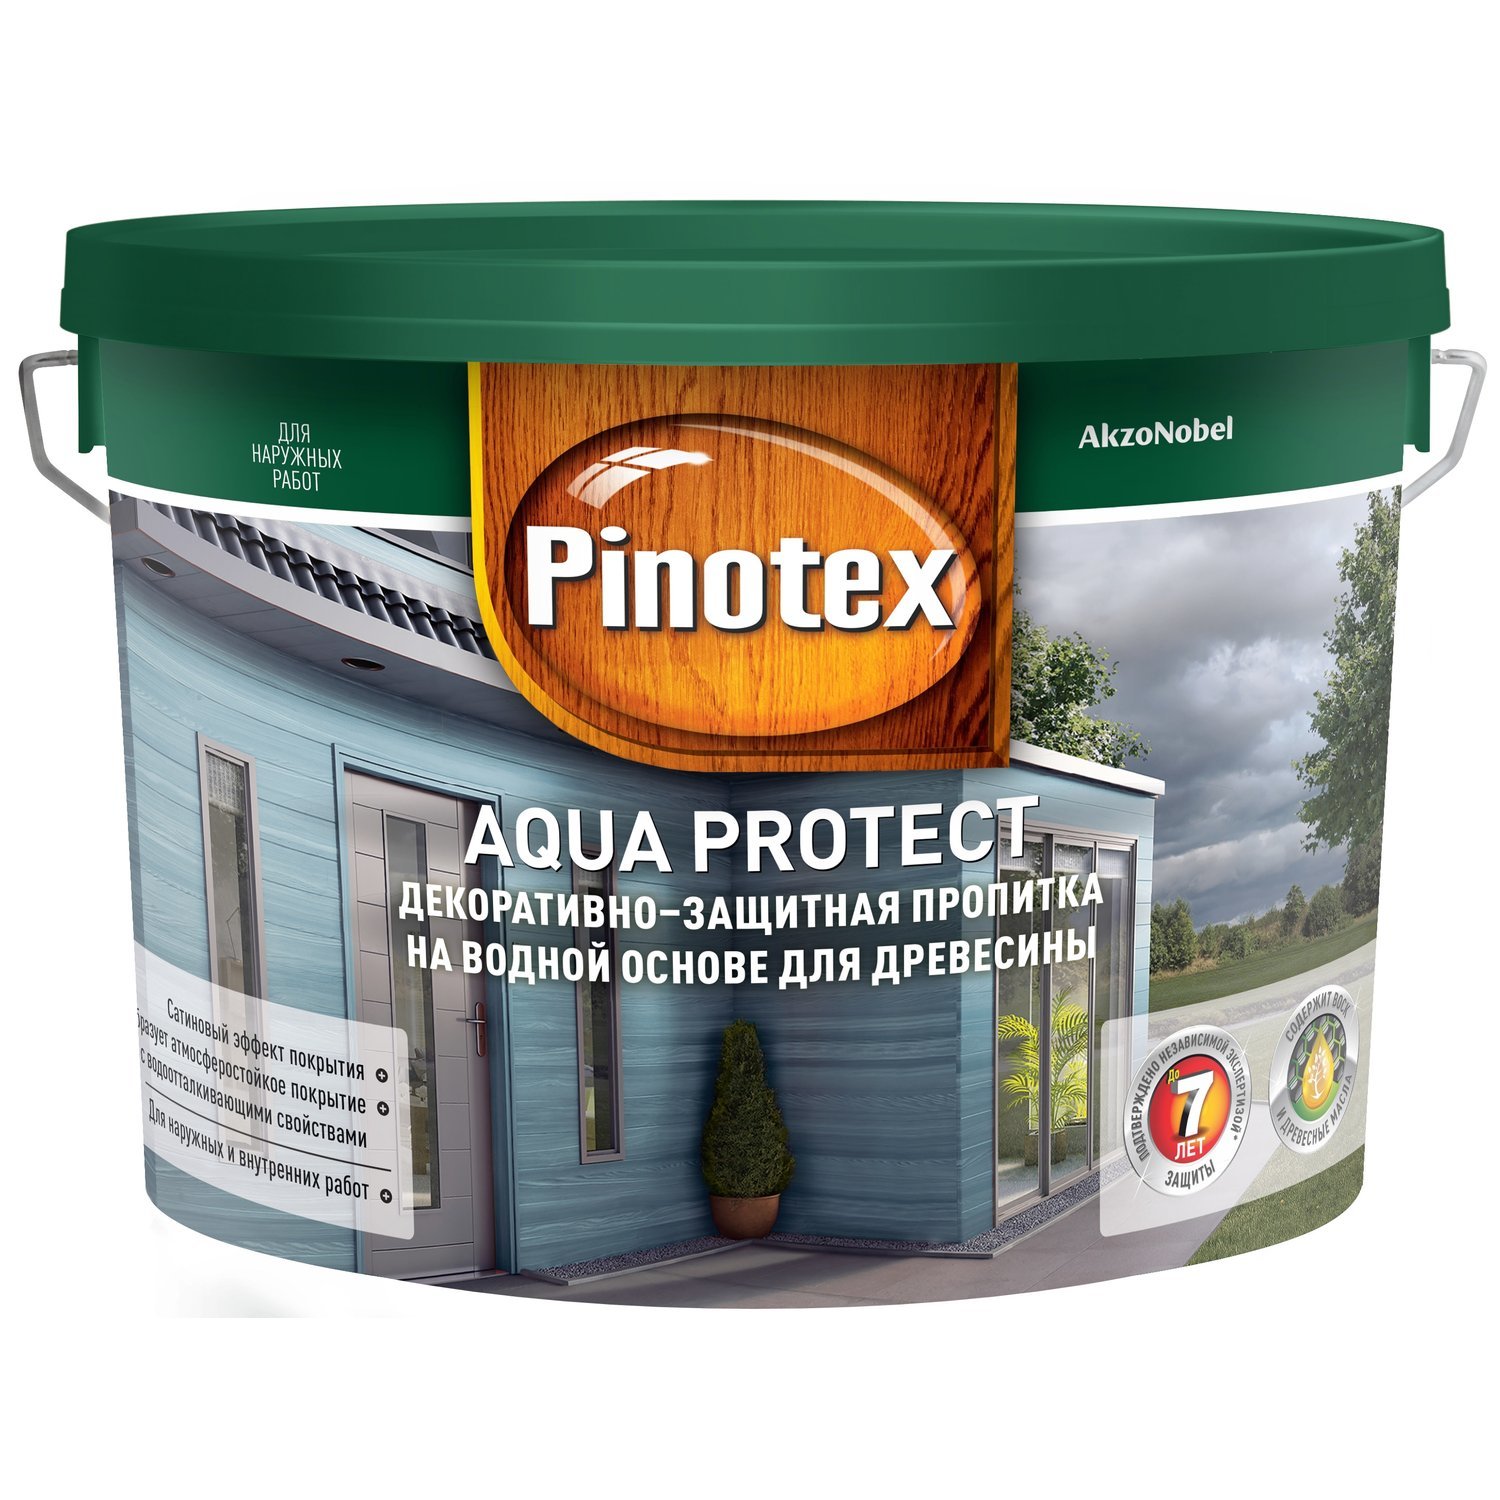 <span style="font-style: italic;">Декоративно-защитная пропитка на водной основе для древесины. Pinotex Aqua Protect</span> 